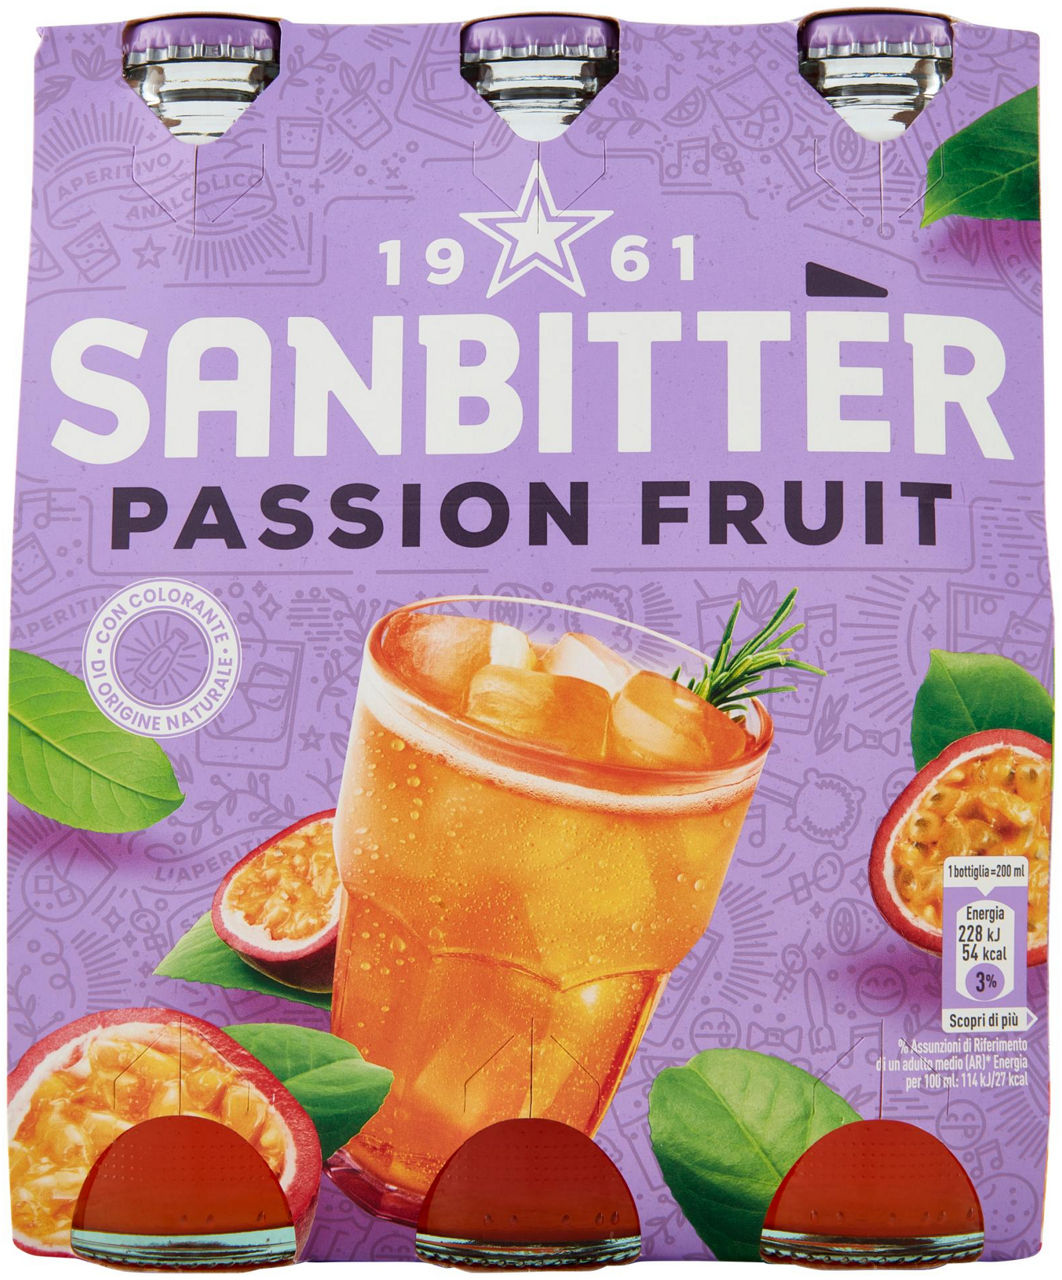 Aperitivo sanbitter passion fruit cluster ml 200 x 3